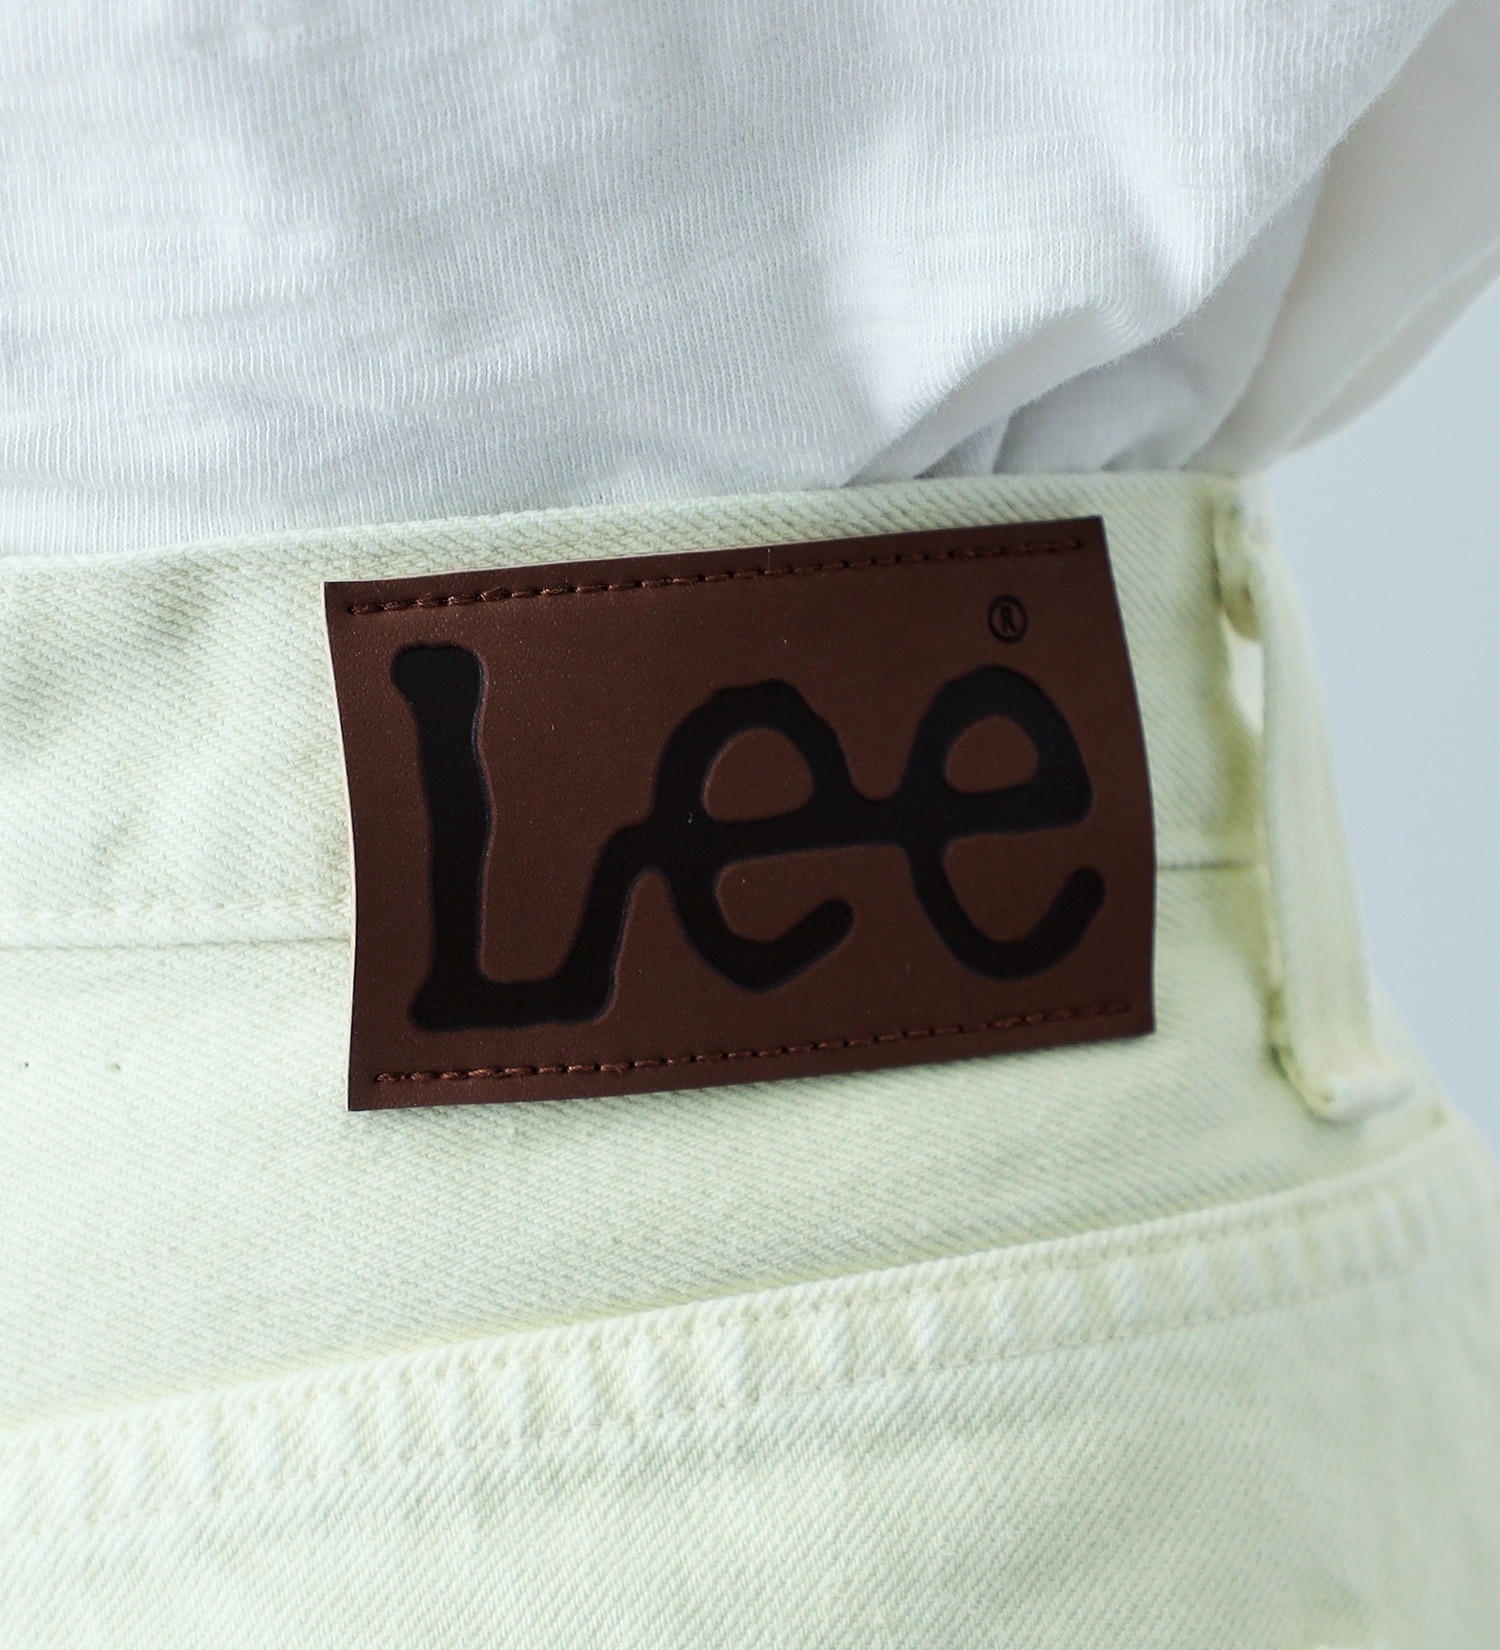 Lee(リー)のSTANDARD WARDROBE スカート|スカート/スカート/レディース|グリーン